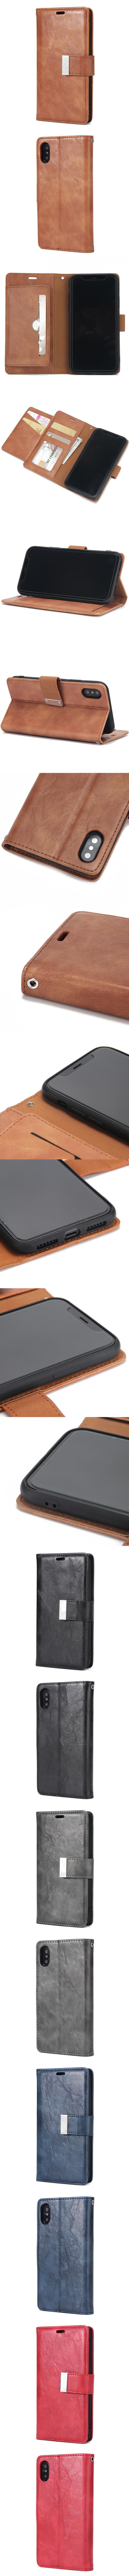 335-Apple-多卡層扣帶翻蓋手機套皮套.jpg